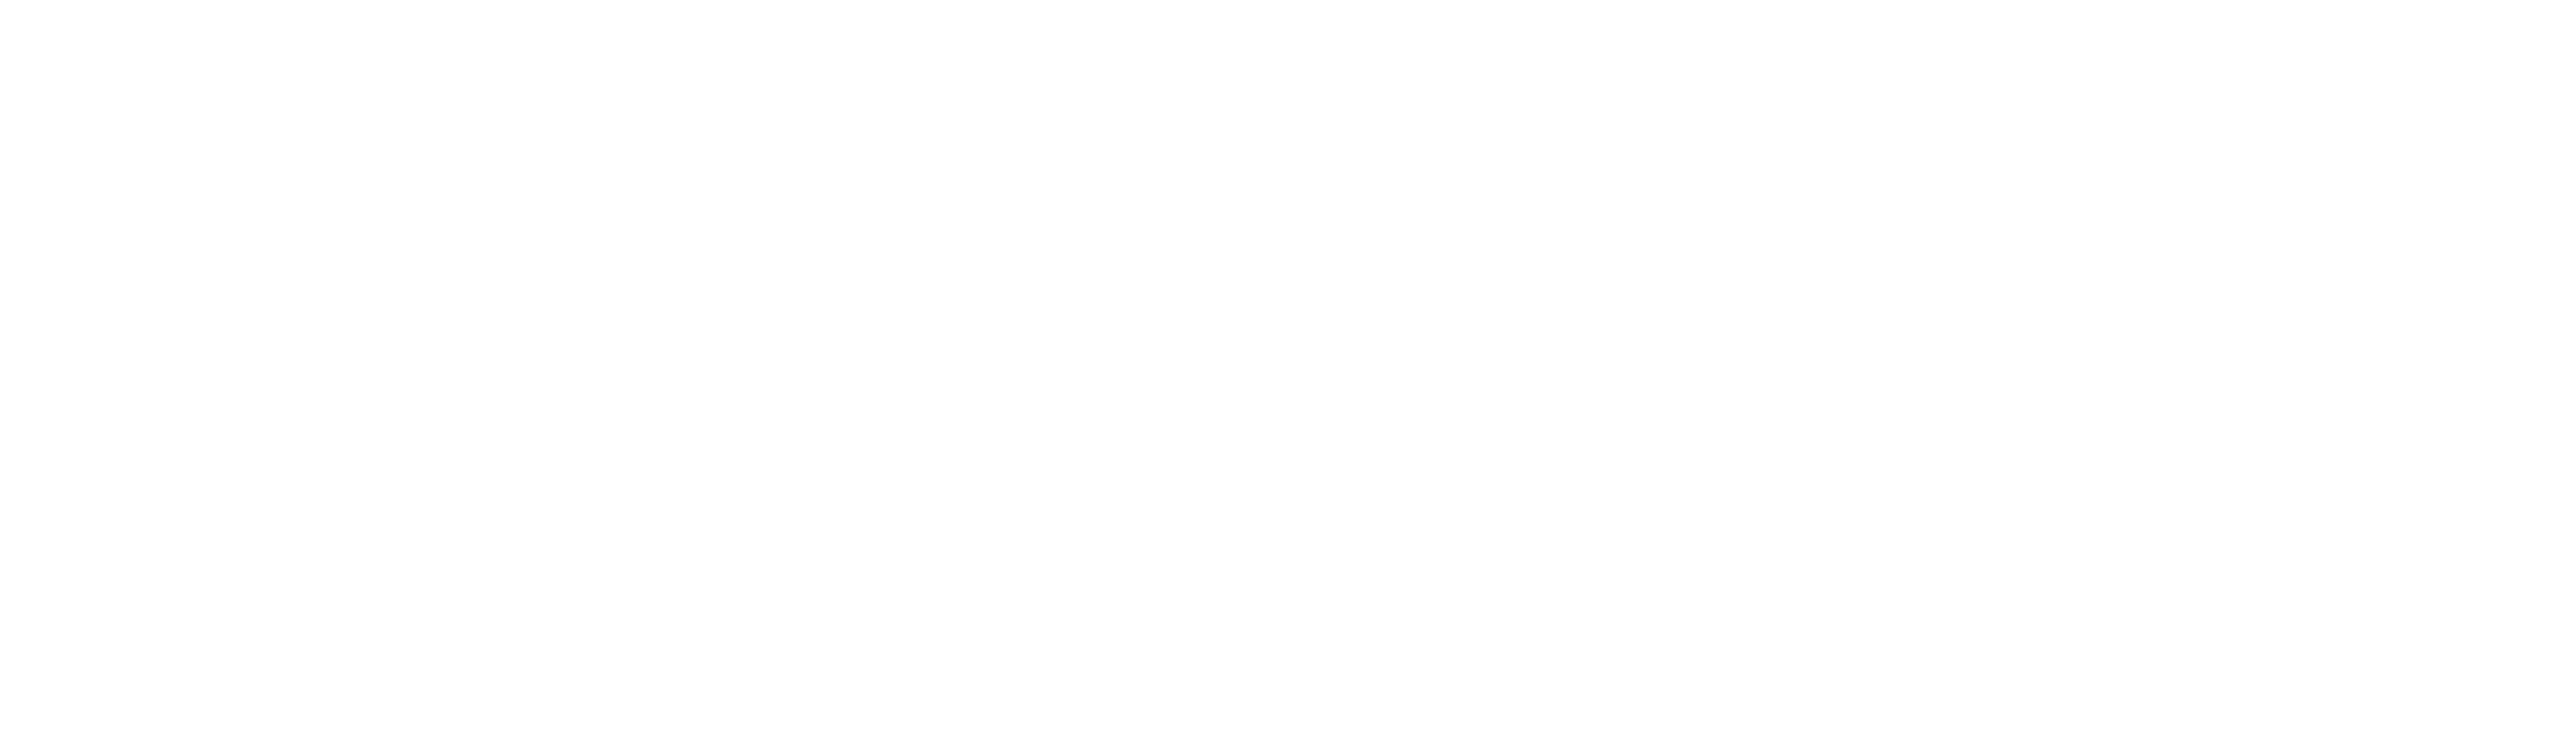 Frank electricista